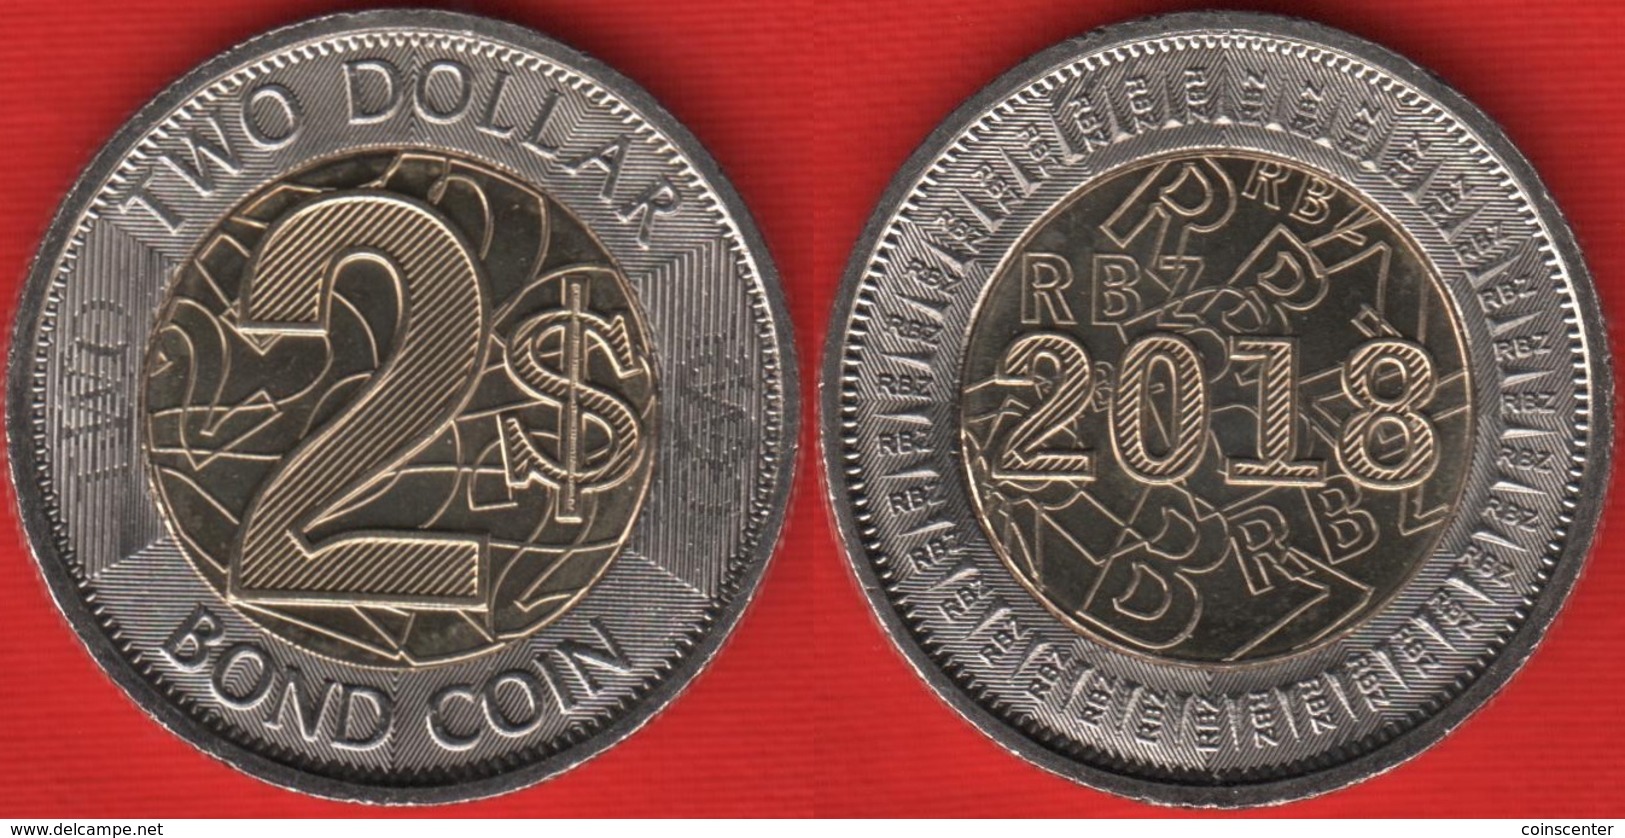 Zimbabwe 2 Dollars 2018 "Bond Coin" BiMetallic UNC - Zimbabwe